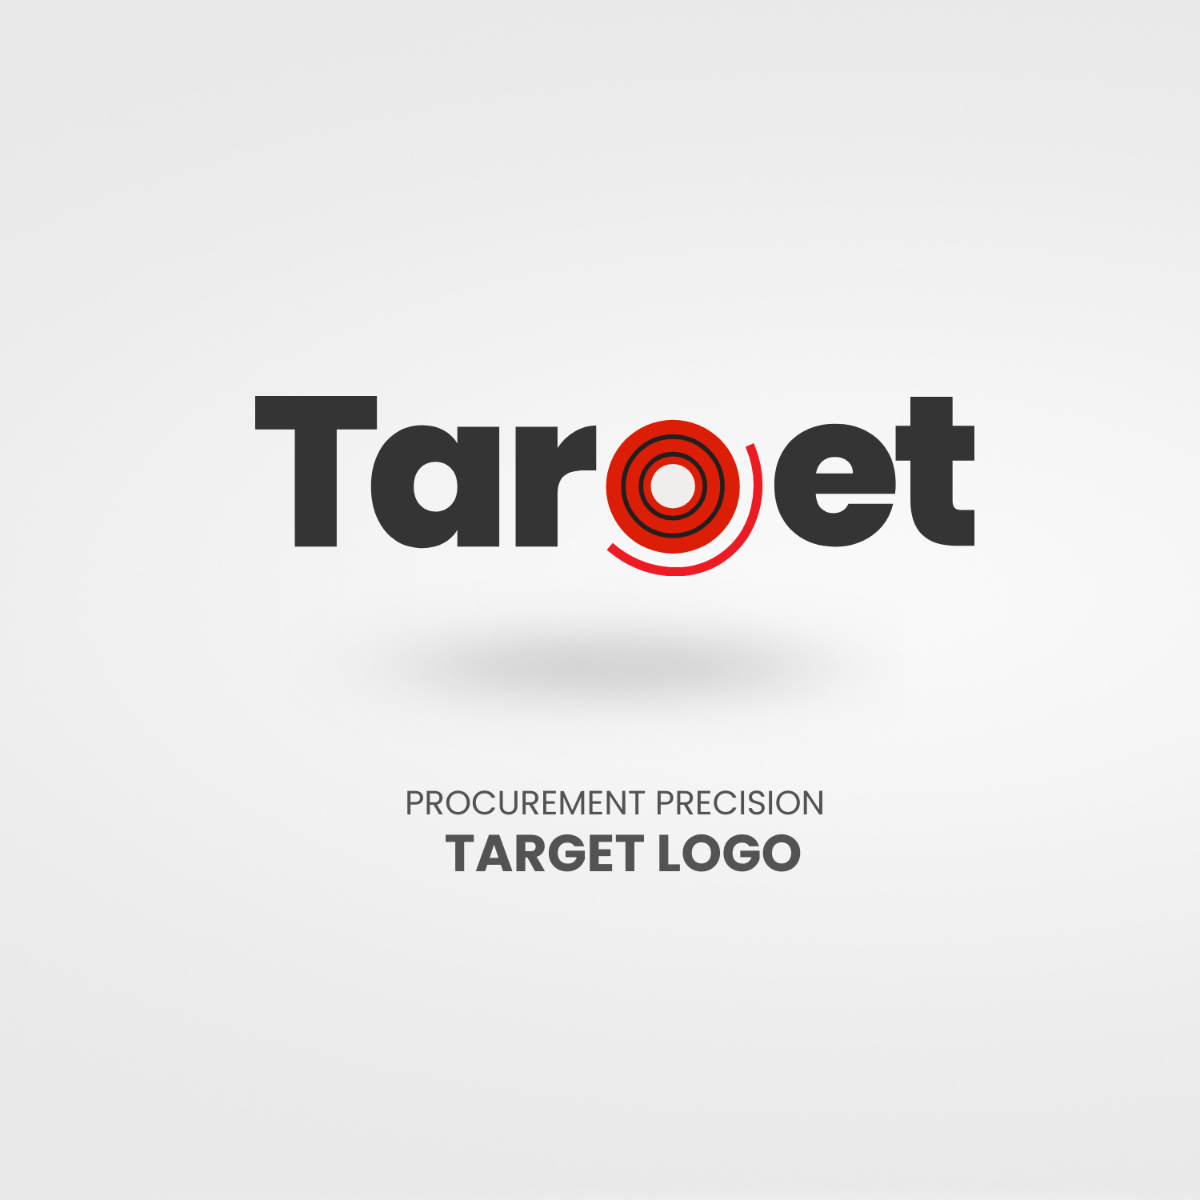 Procurement Precision Target Logo Template